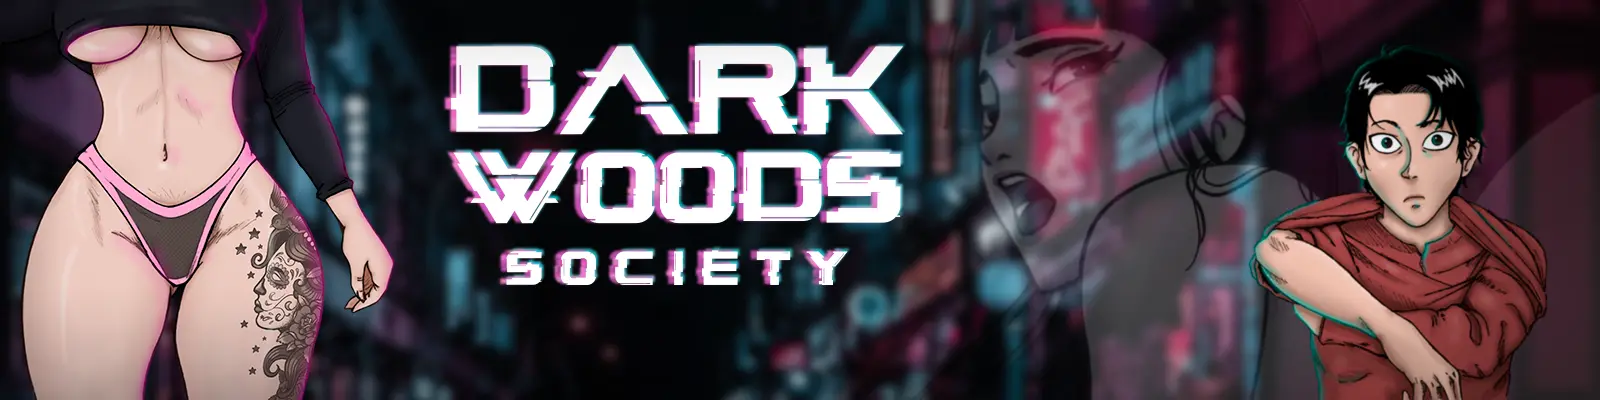 Dark Woods Society [v0.1.0] main image